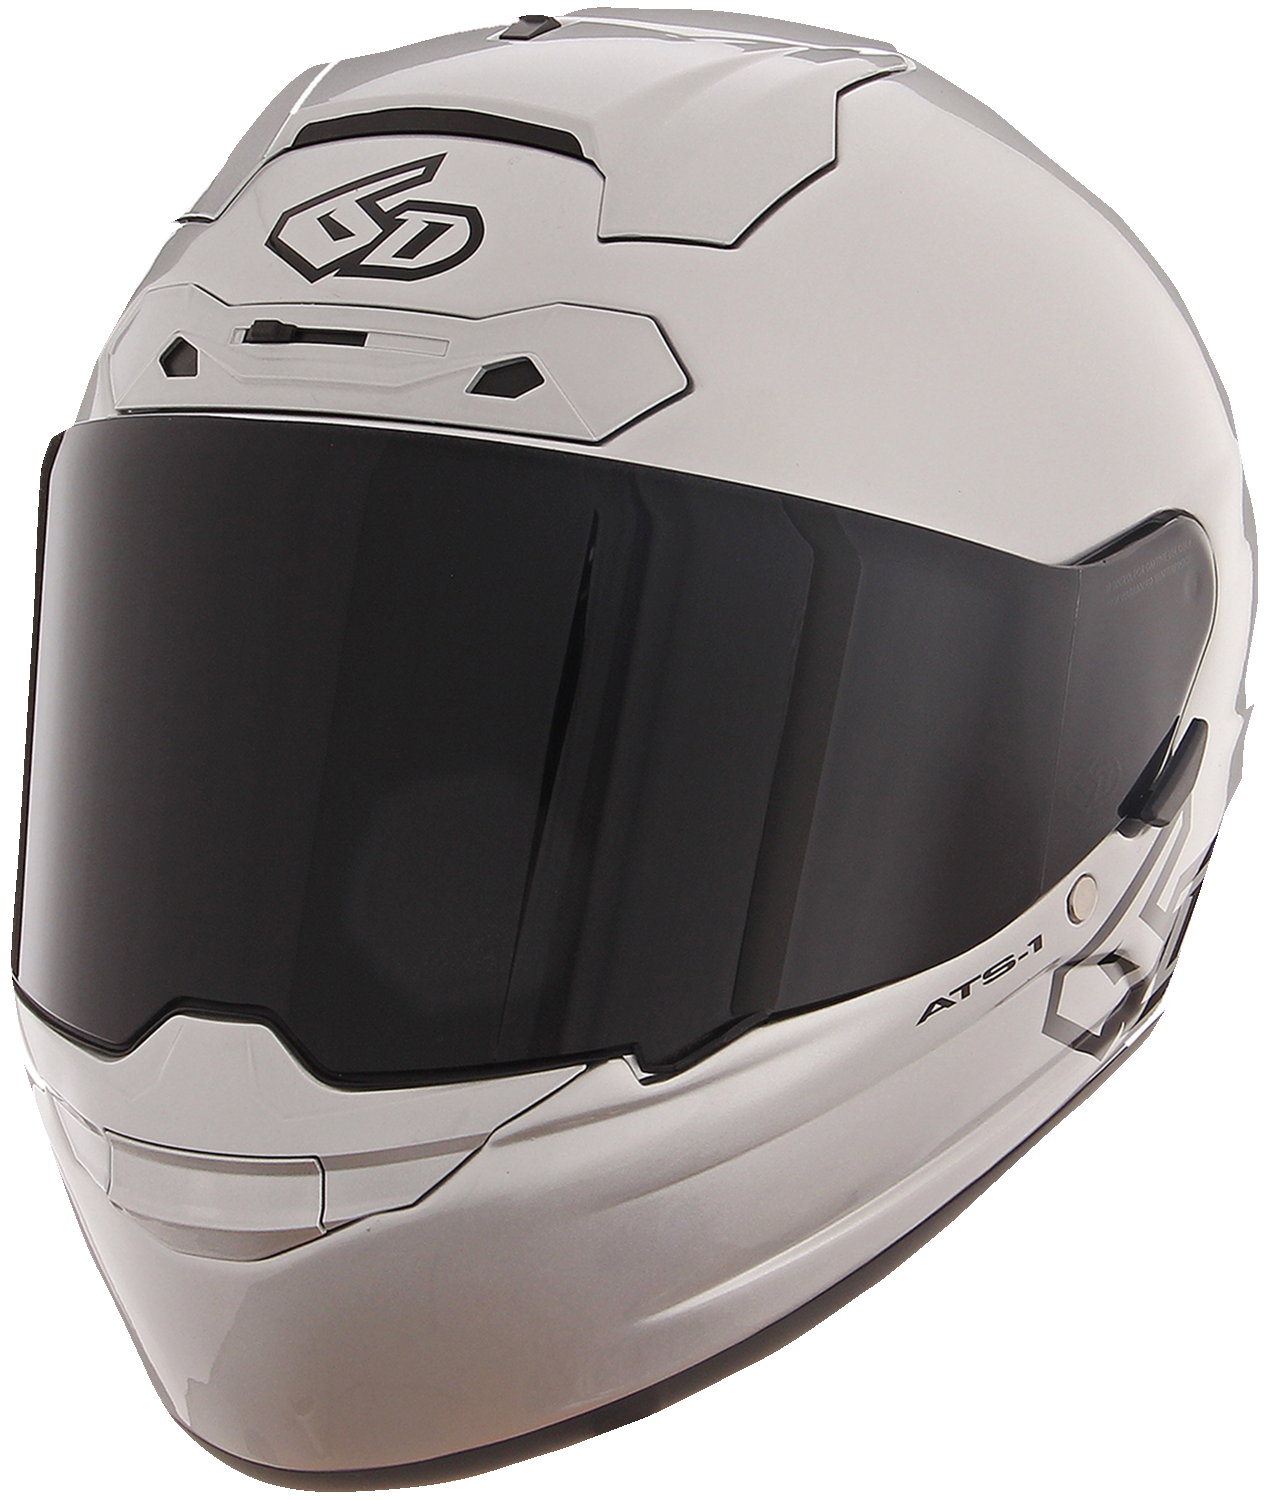 6D ATS-1R Helmet - Gloss Silver - Large 30-0997